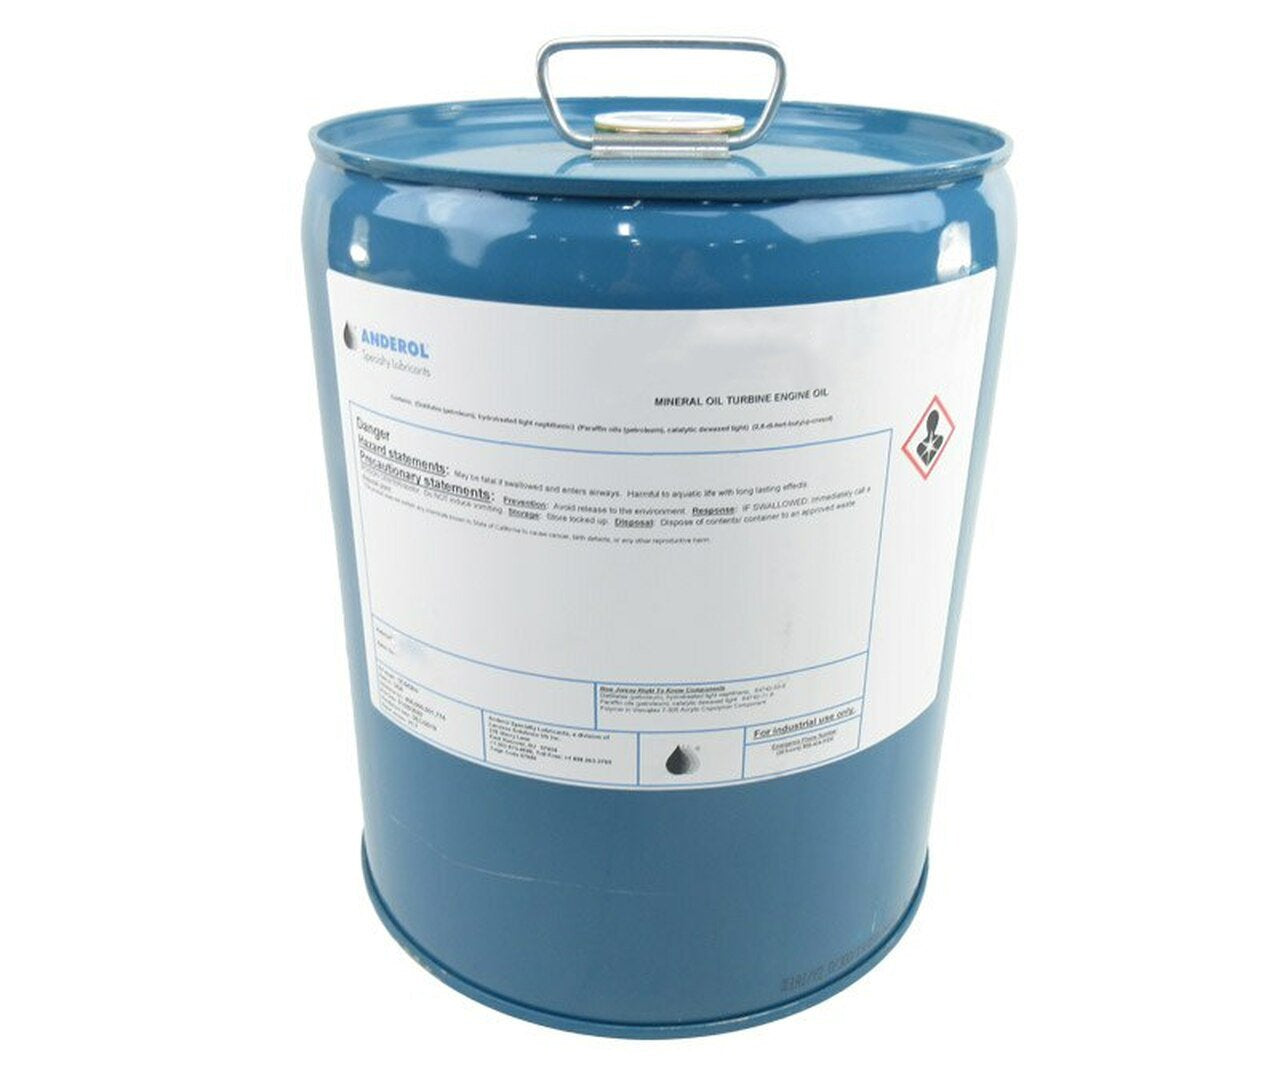 MIL-PRF-7870 General-Purpose Low-Temperature Oil: ROYCO® 363 - Pail